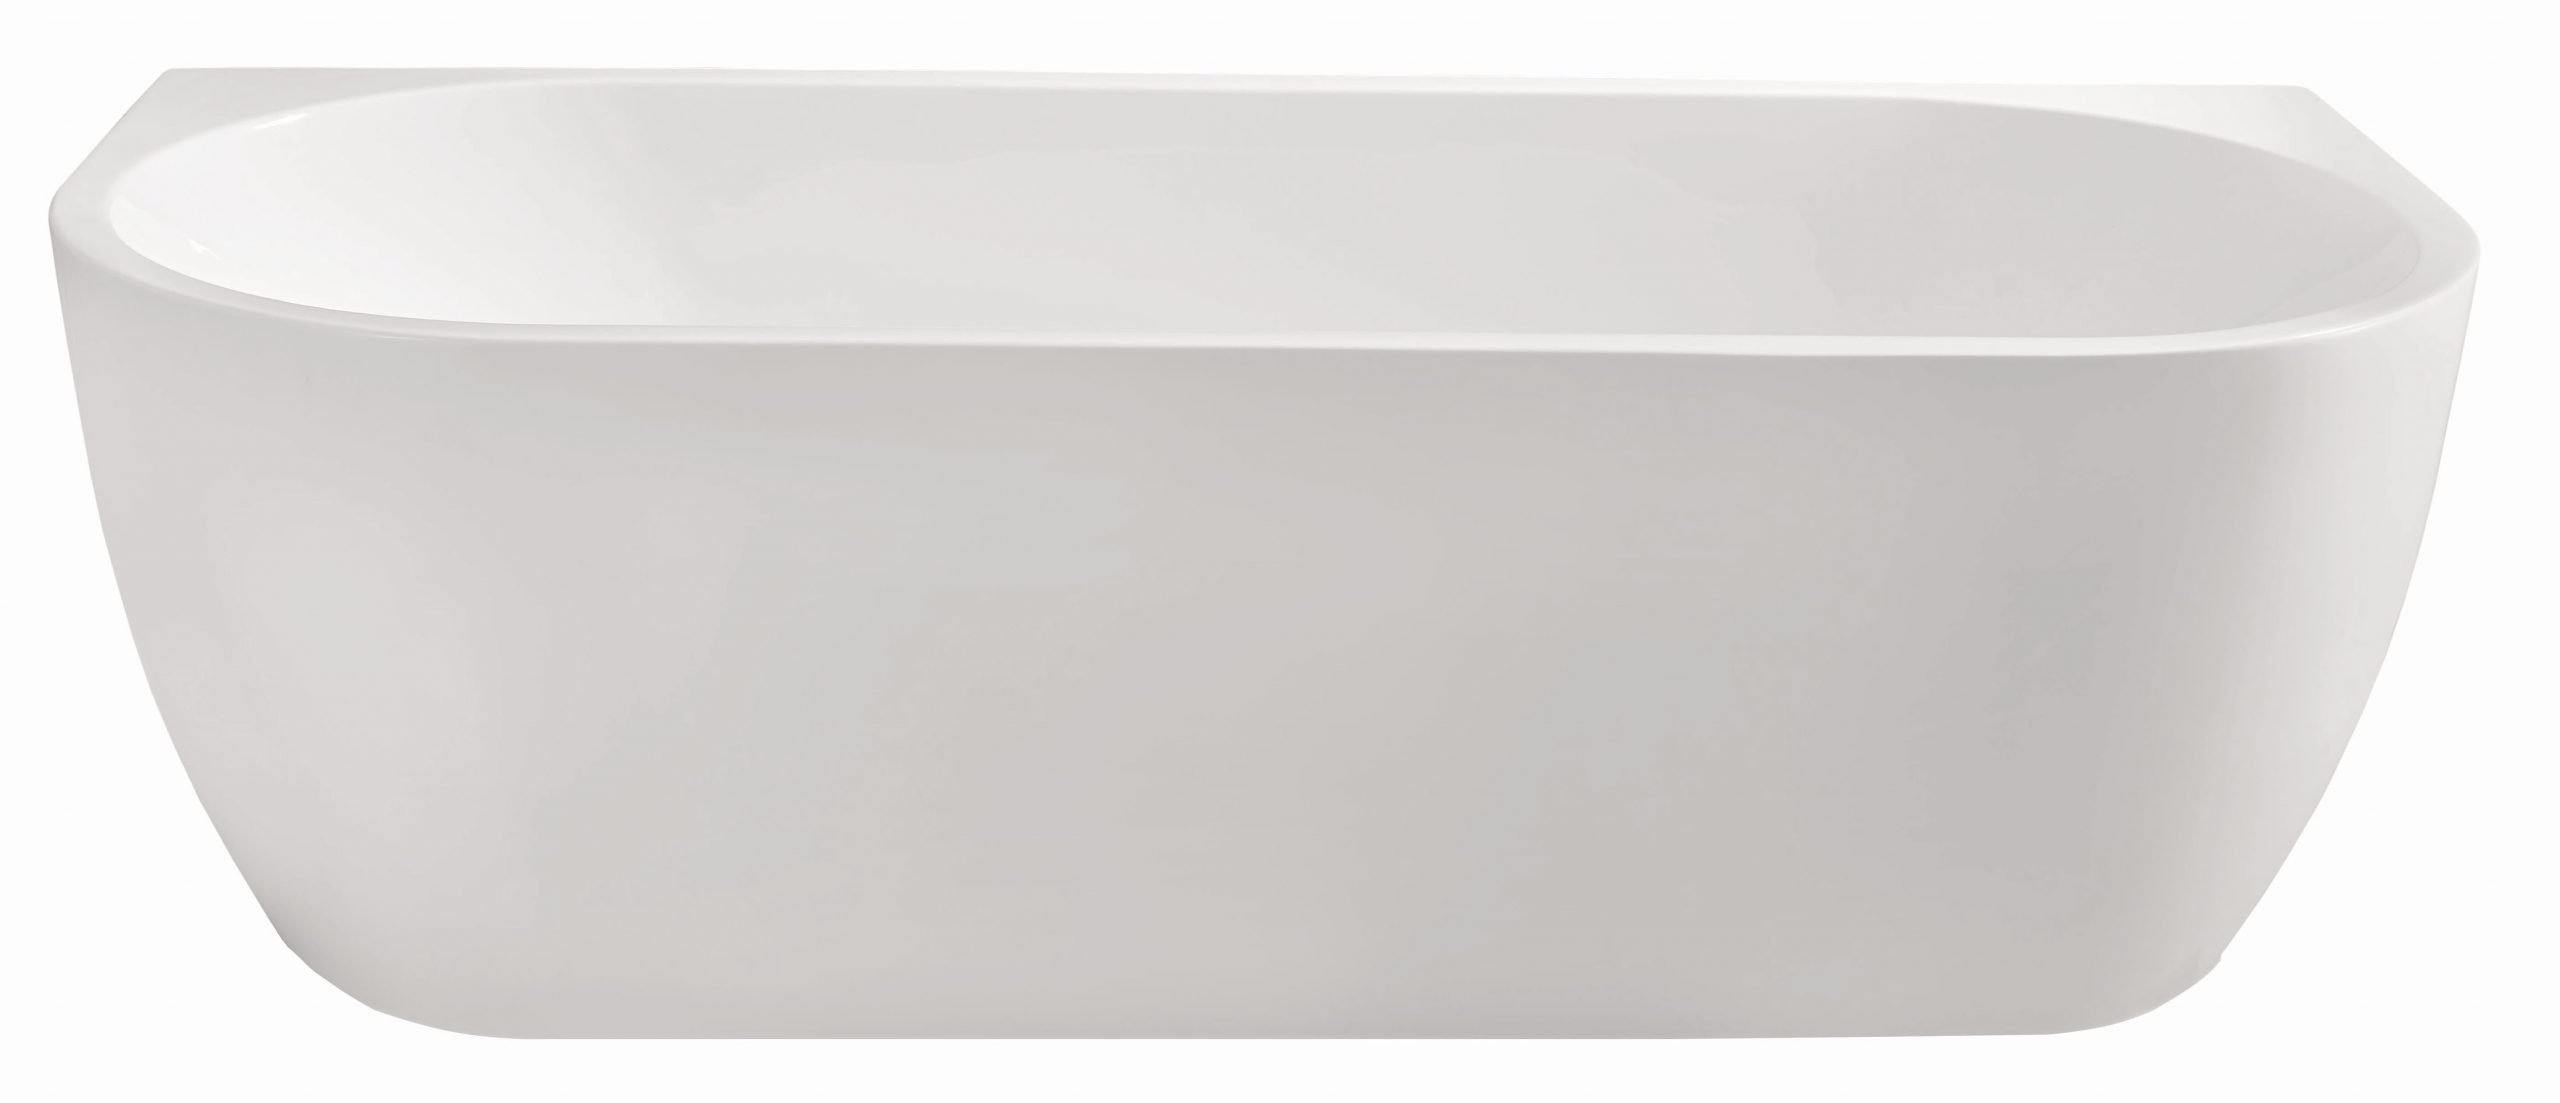 Product Wall half-vrijstaand acryl ligbad 180×80 wit